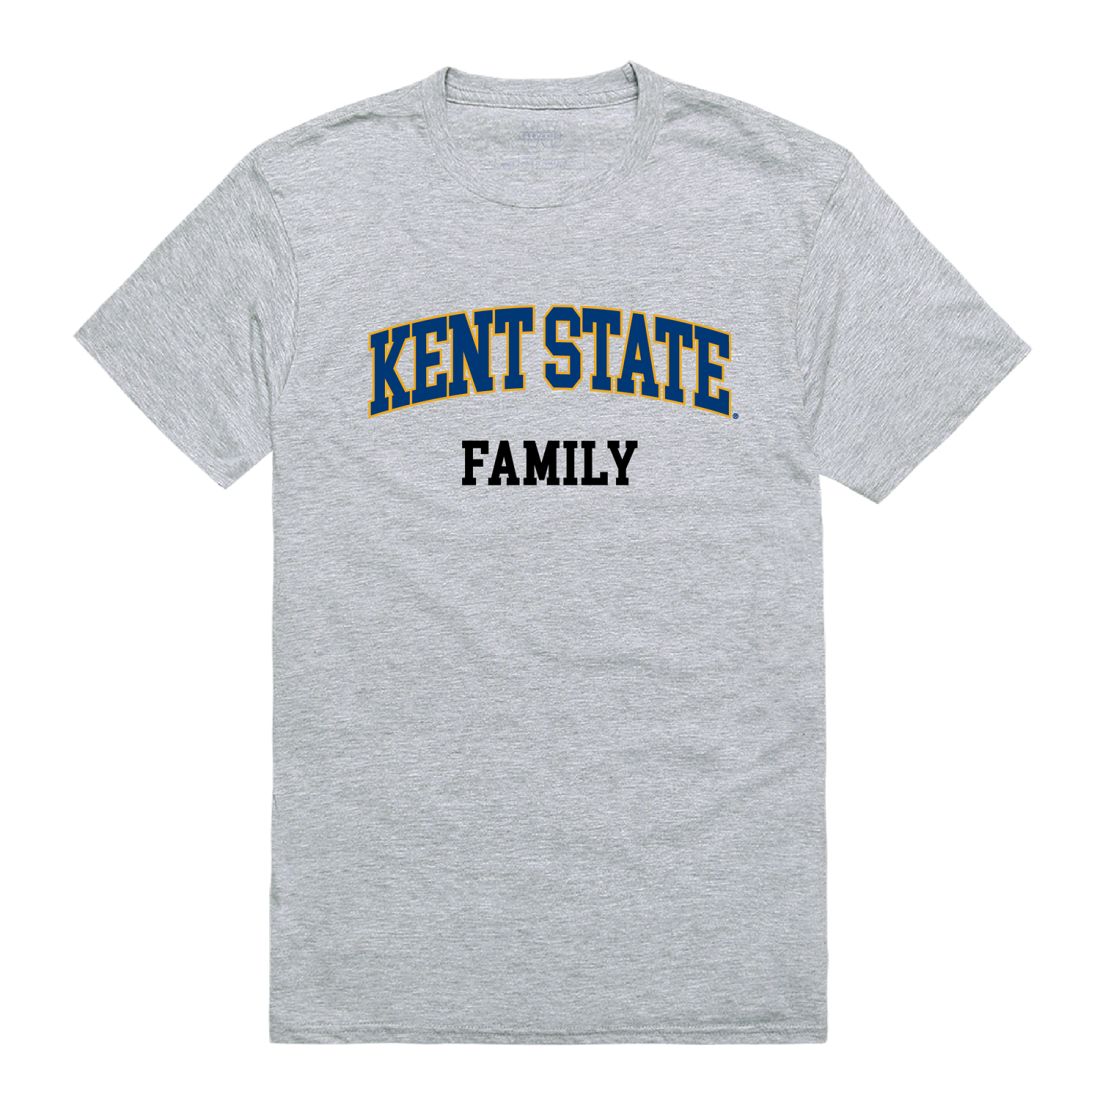 KSU Kent State University The Golden Eagles Family T-Shirt